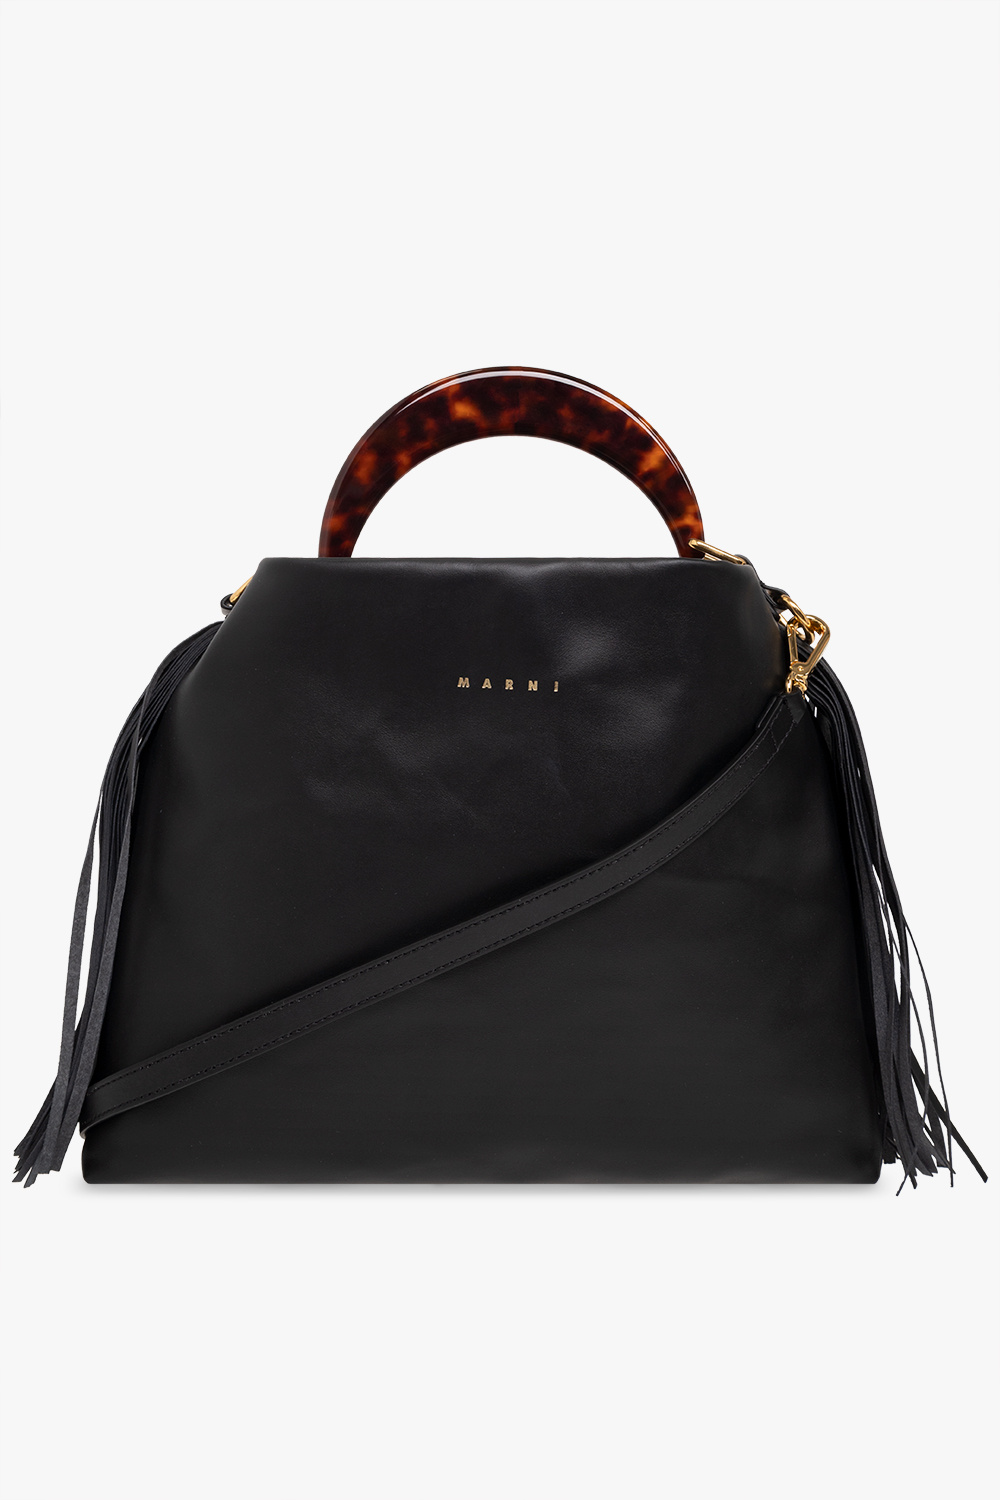 Marni ‘Venice Small’ shoulder bag | Women's Bags | Vitkac